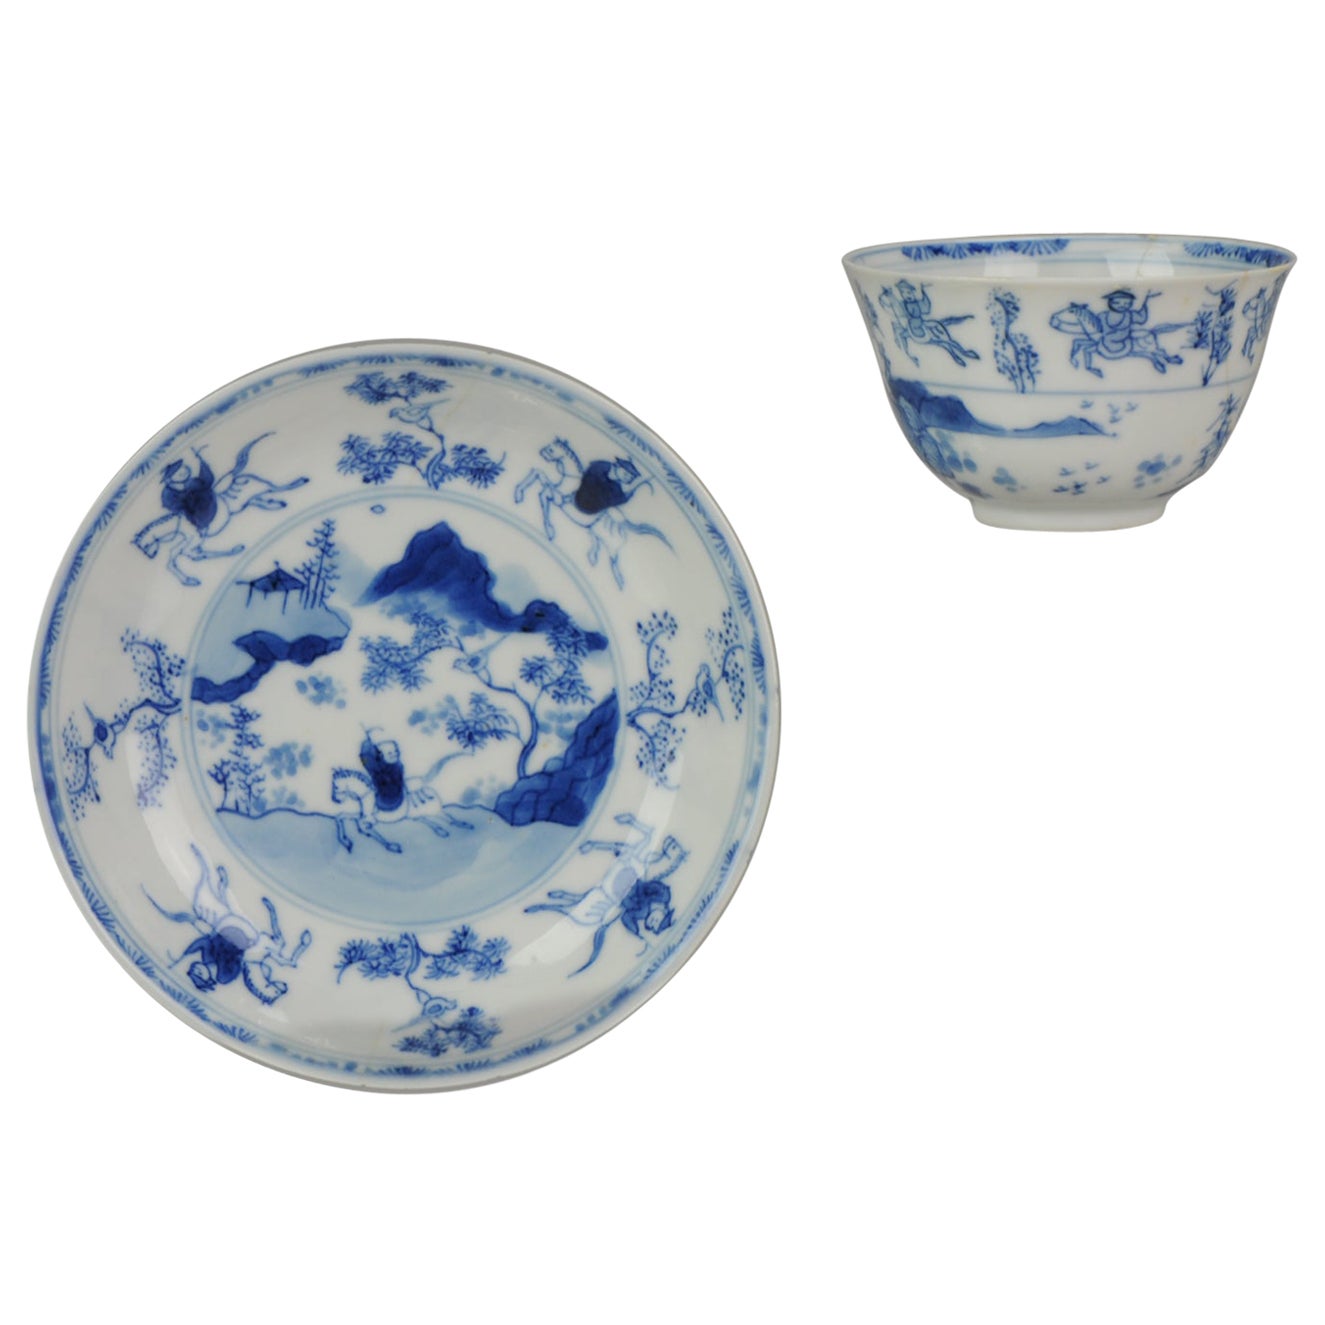 Rare Antique Kangxi Chinese Porcelain Tea Set 'Master of the Rocks', 1680-1700